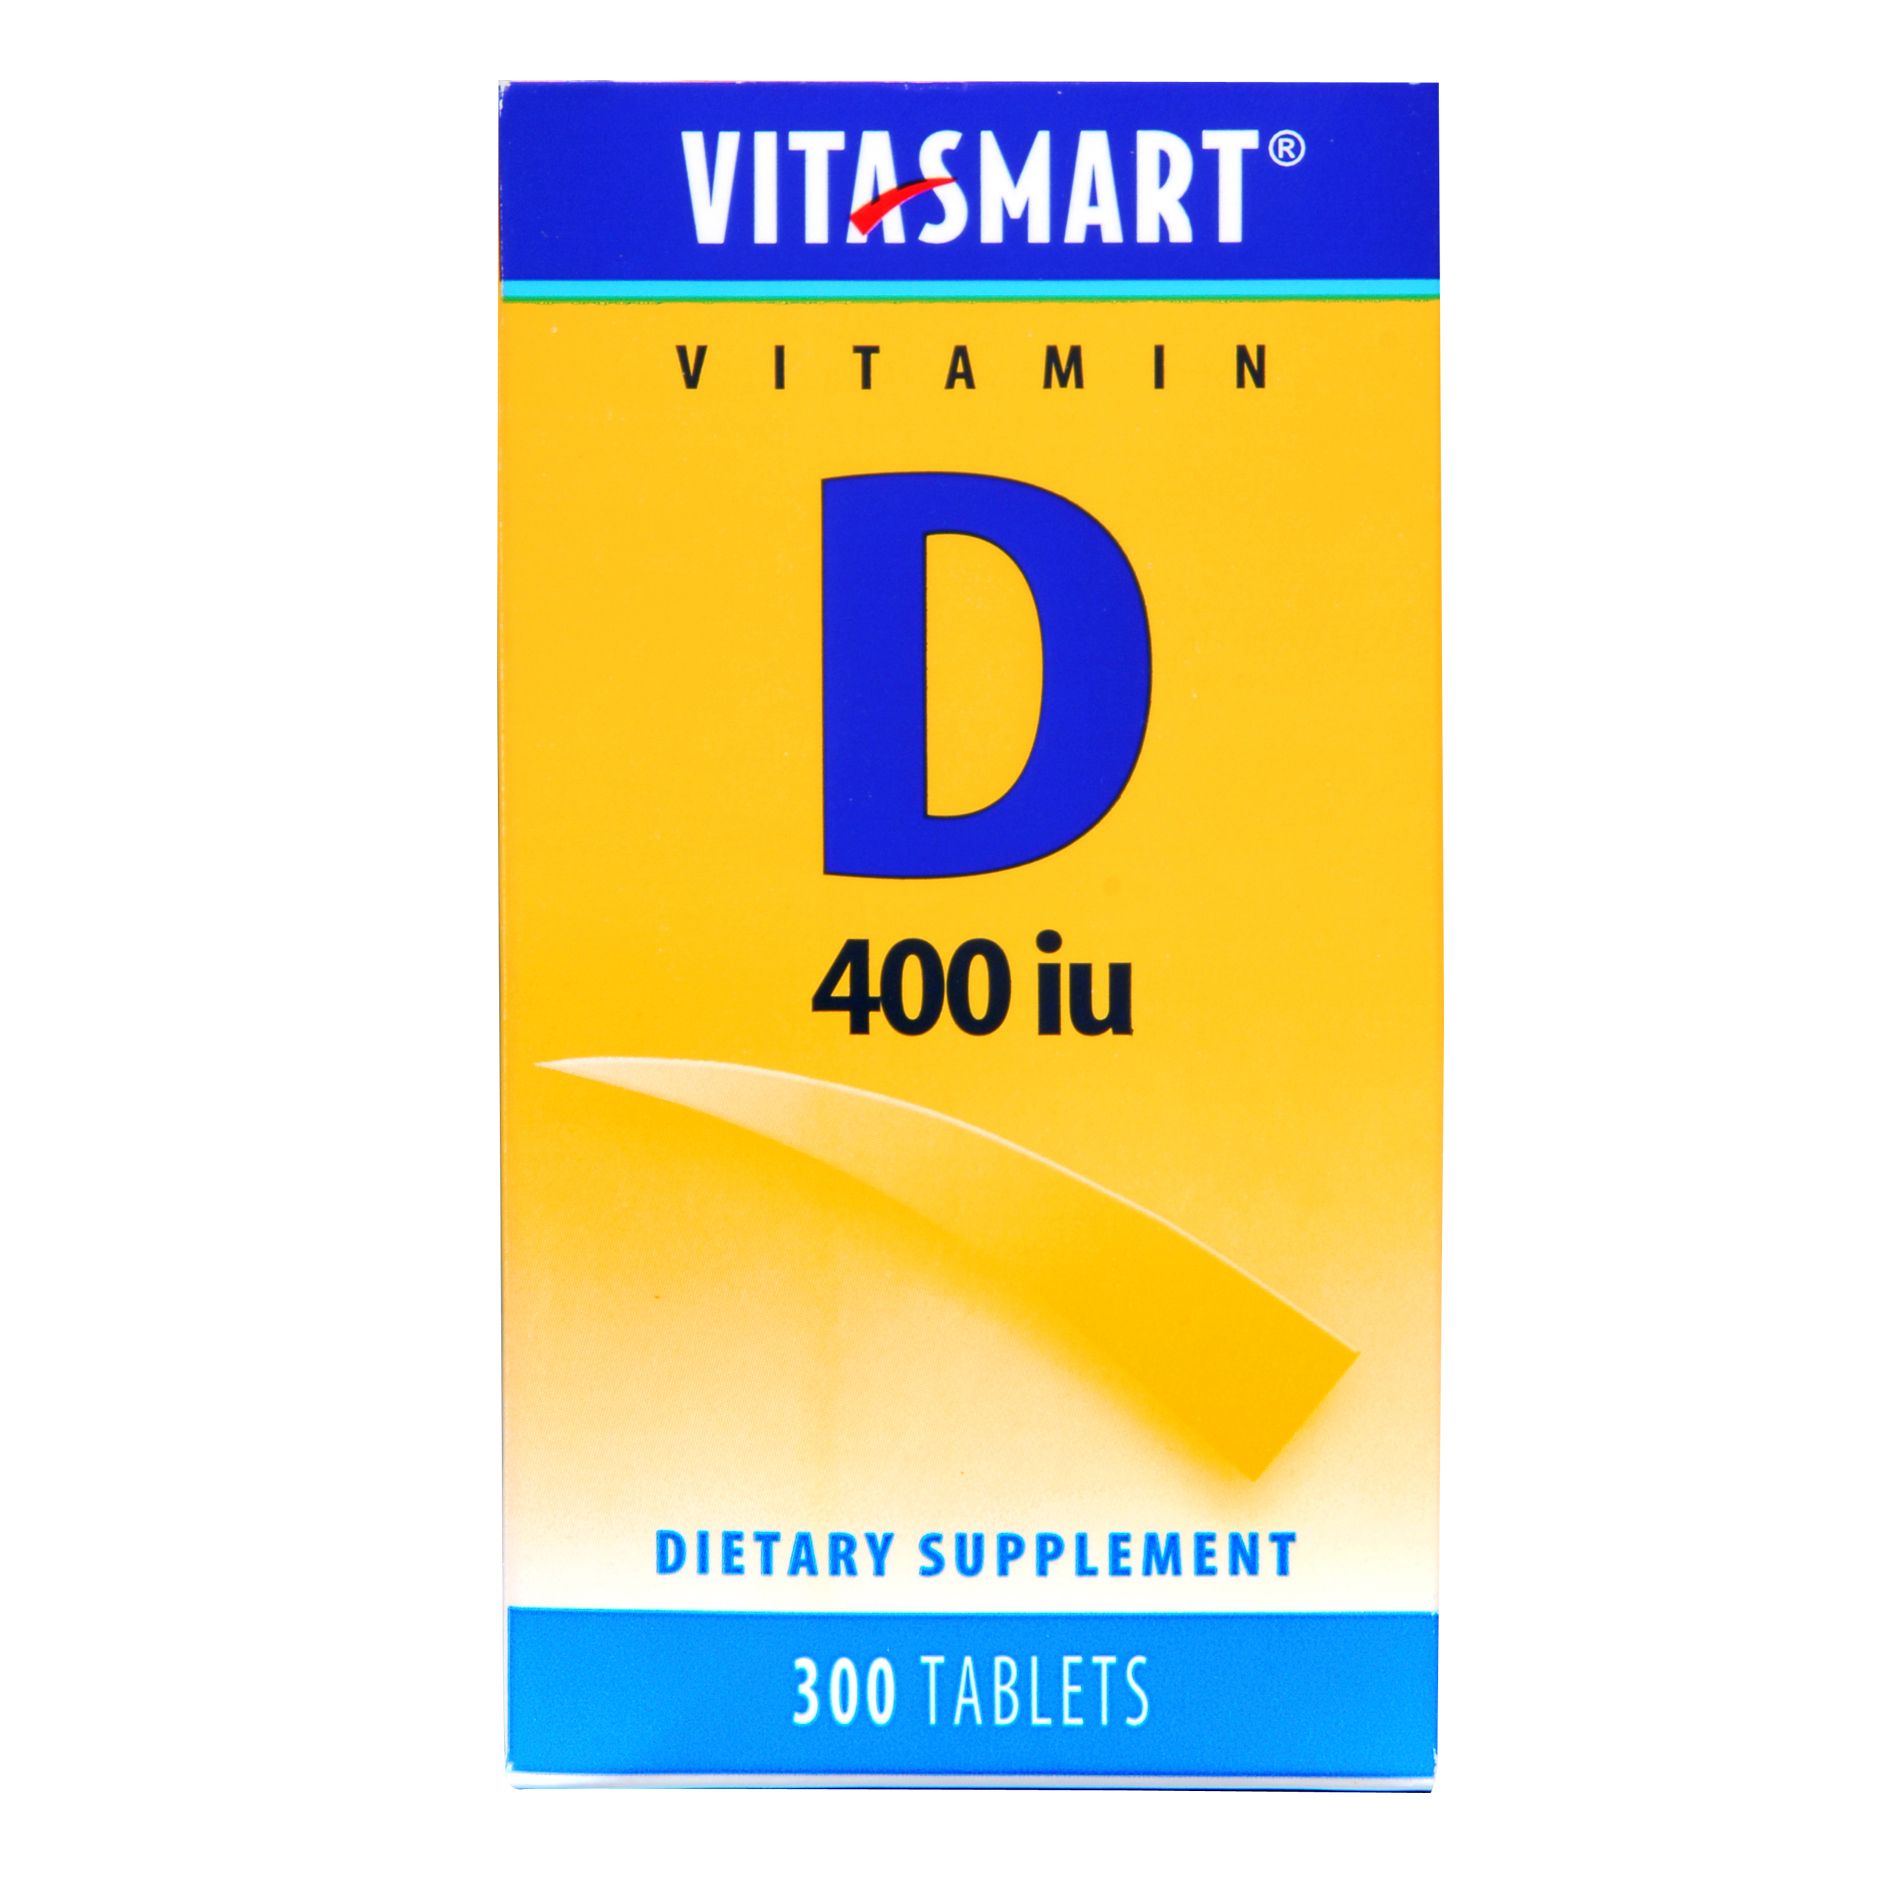 VitaSmart Vitamin D 400 IU Dietary Supplement Tablets 300 Count